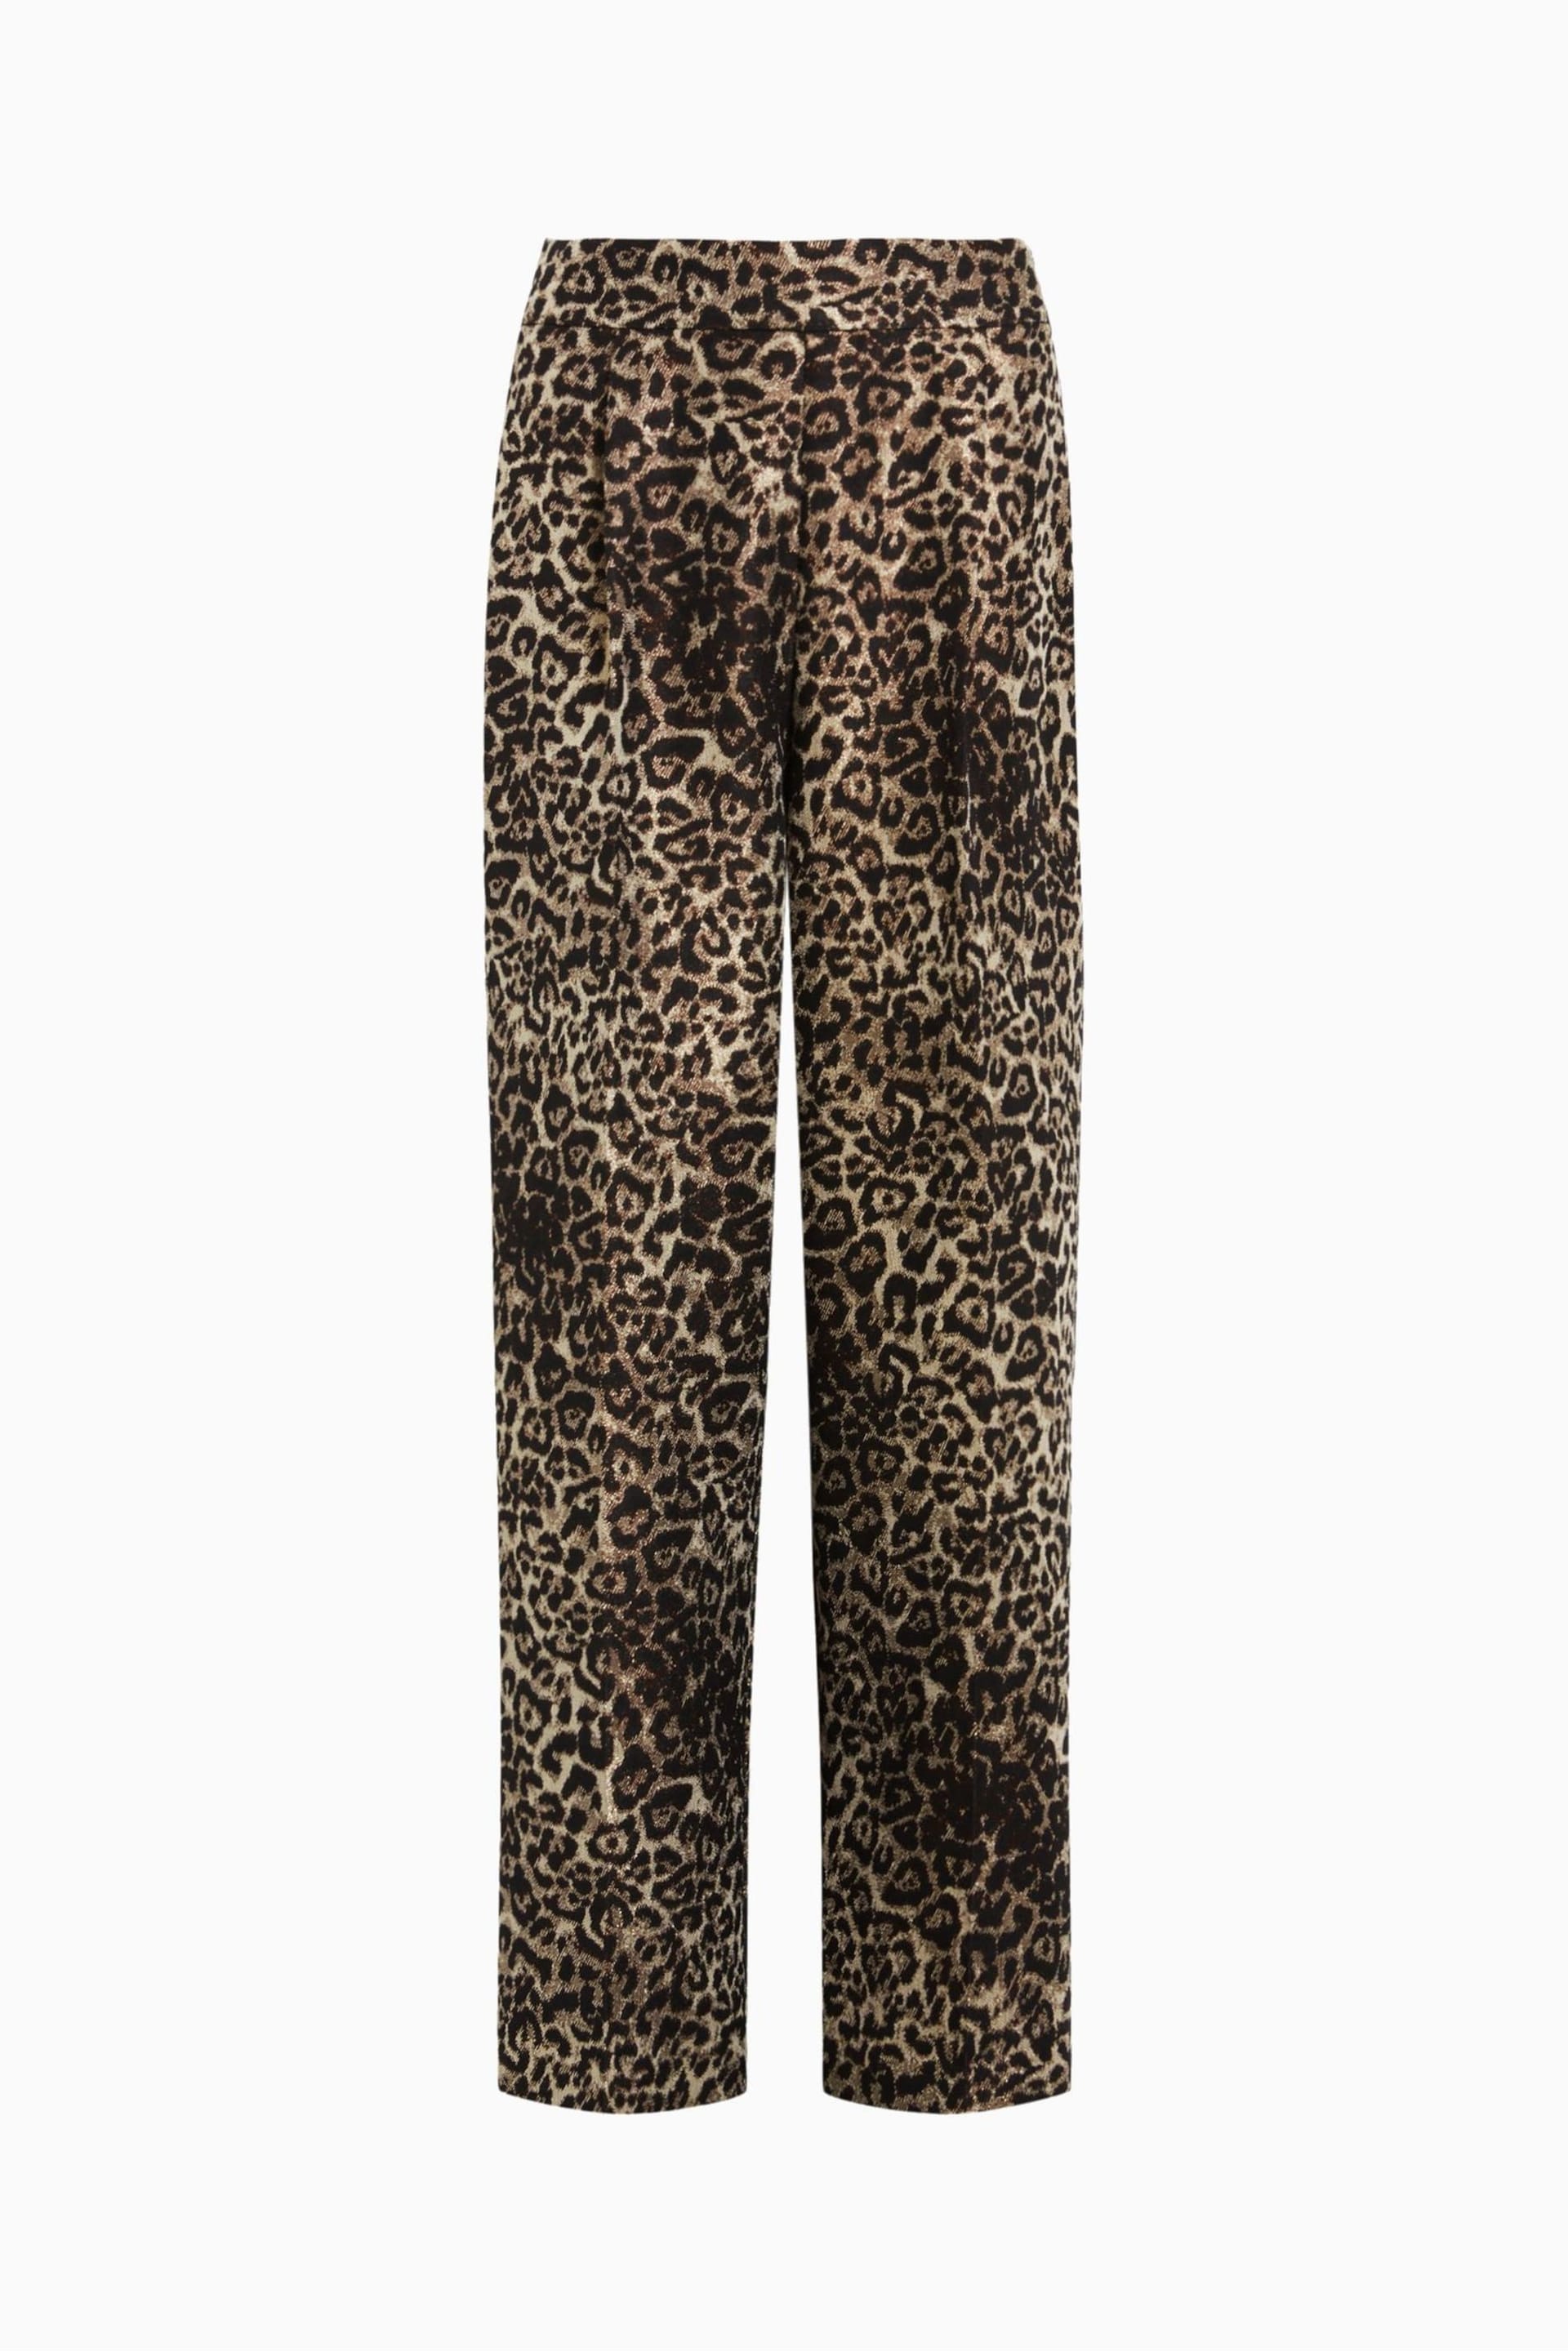 AllSaints Gold Jemi Leppo Trousers - Image 7 of 8